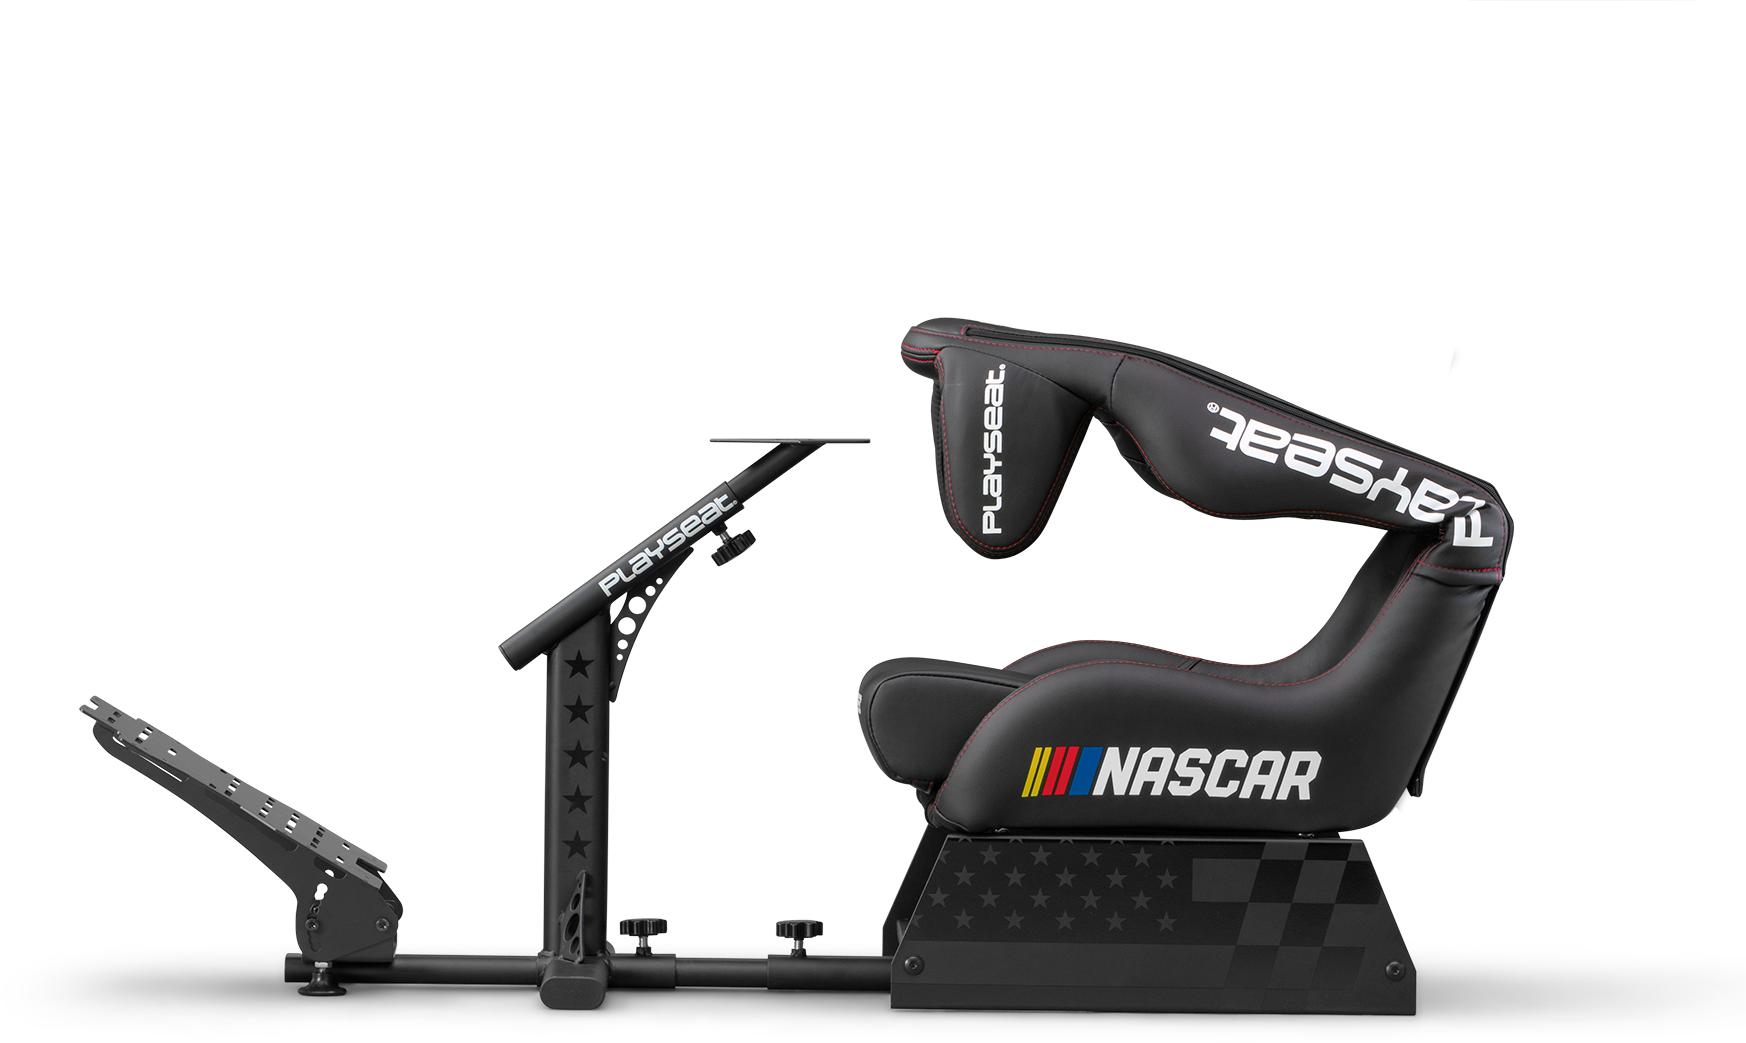 Playseat - Cockpit Playseat® Evolution PRO - NASCAR Edition *LIMITED EDITION*